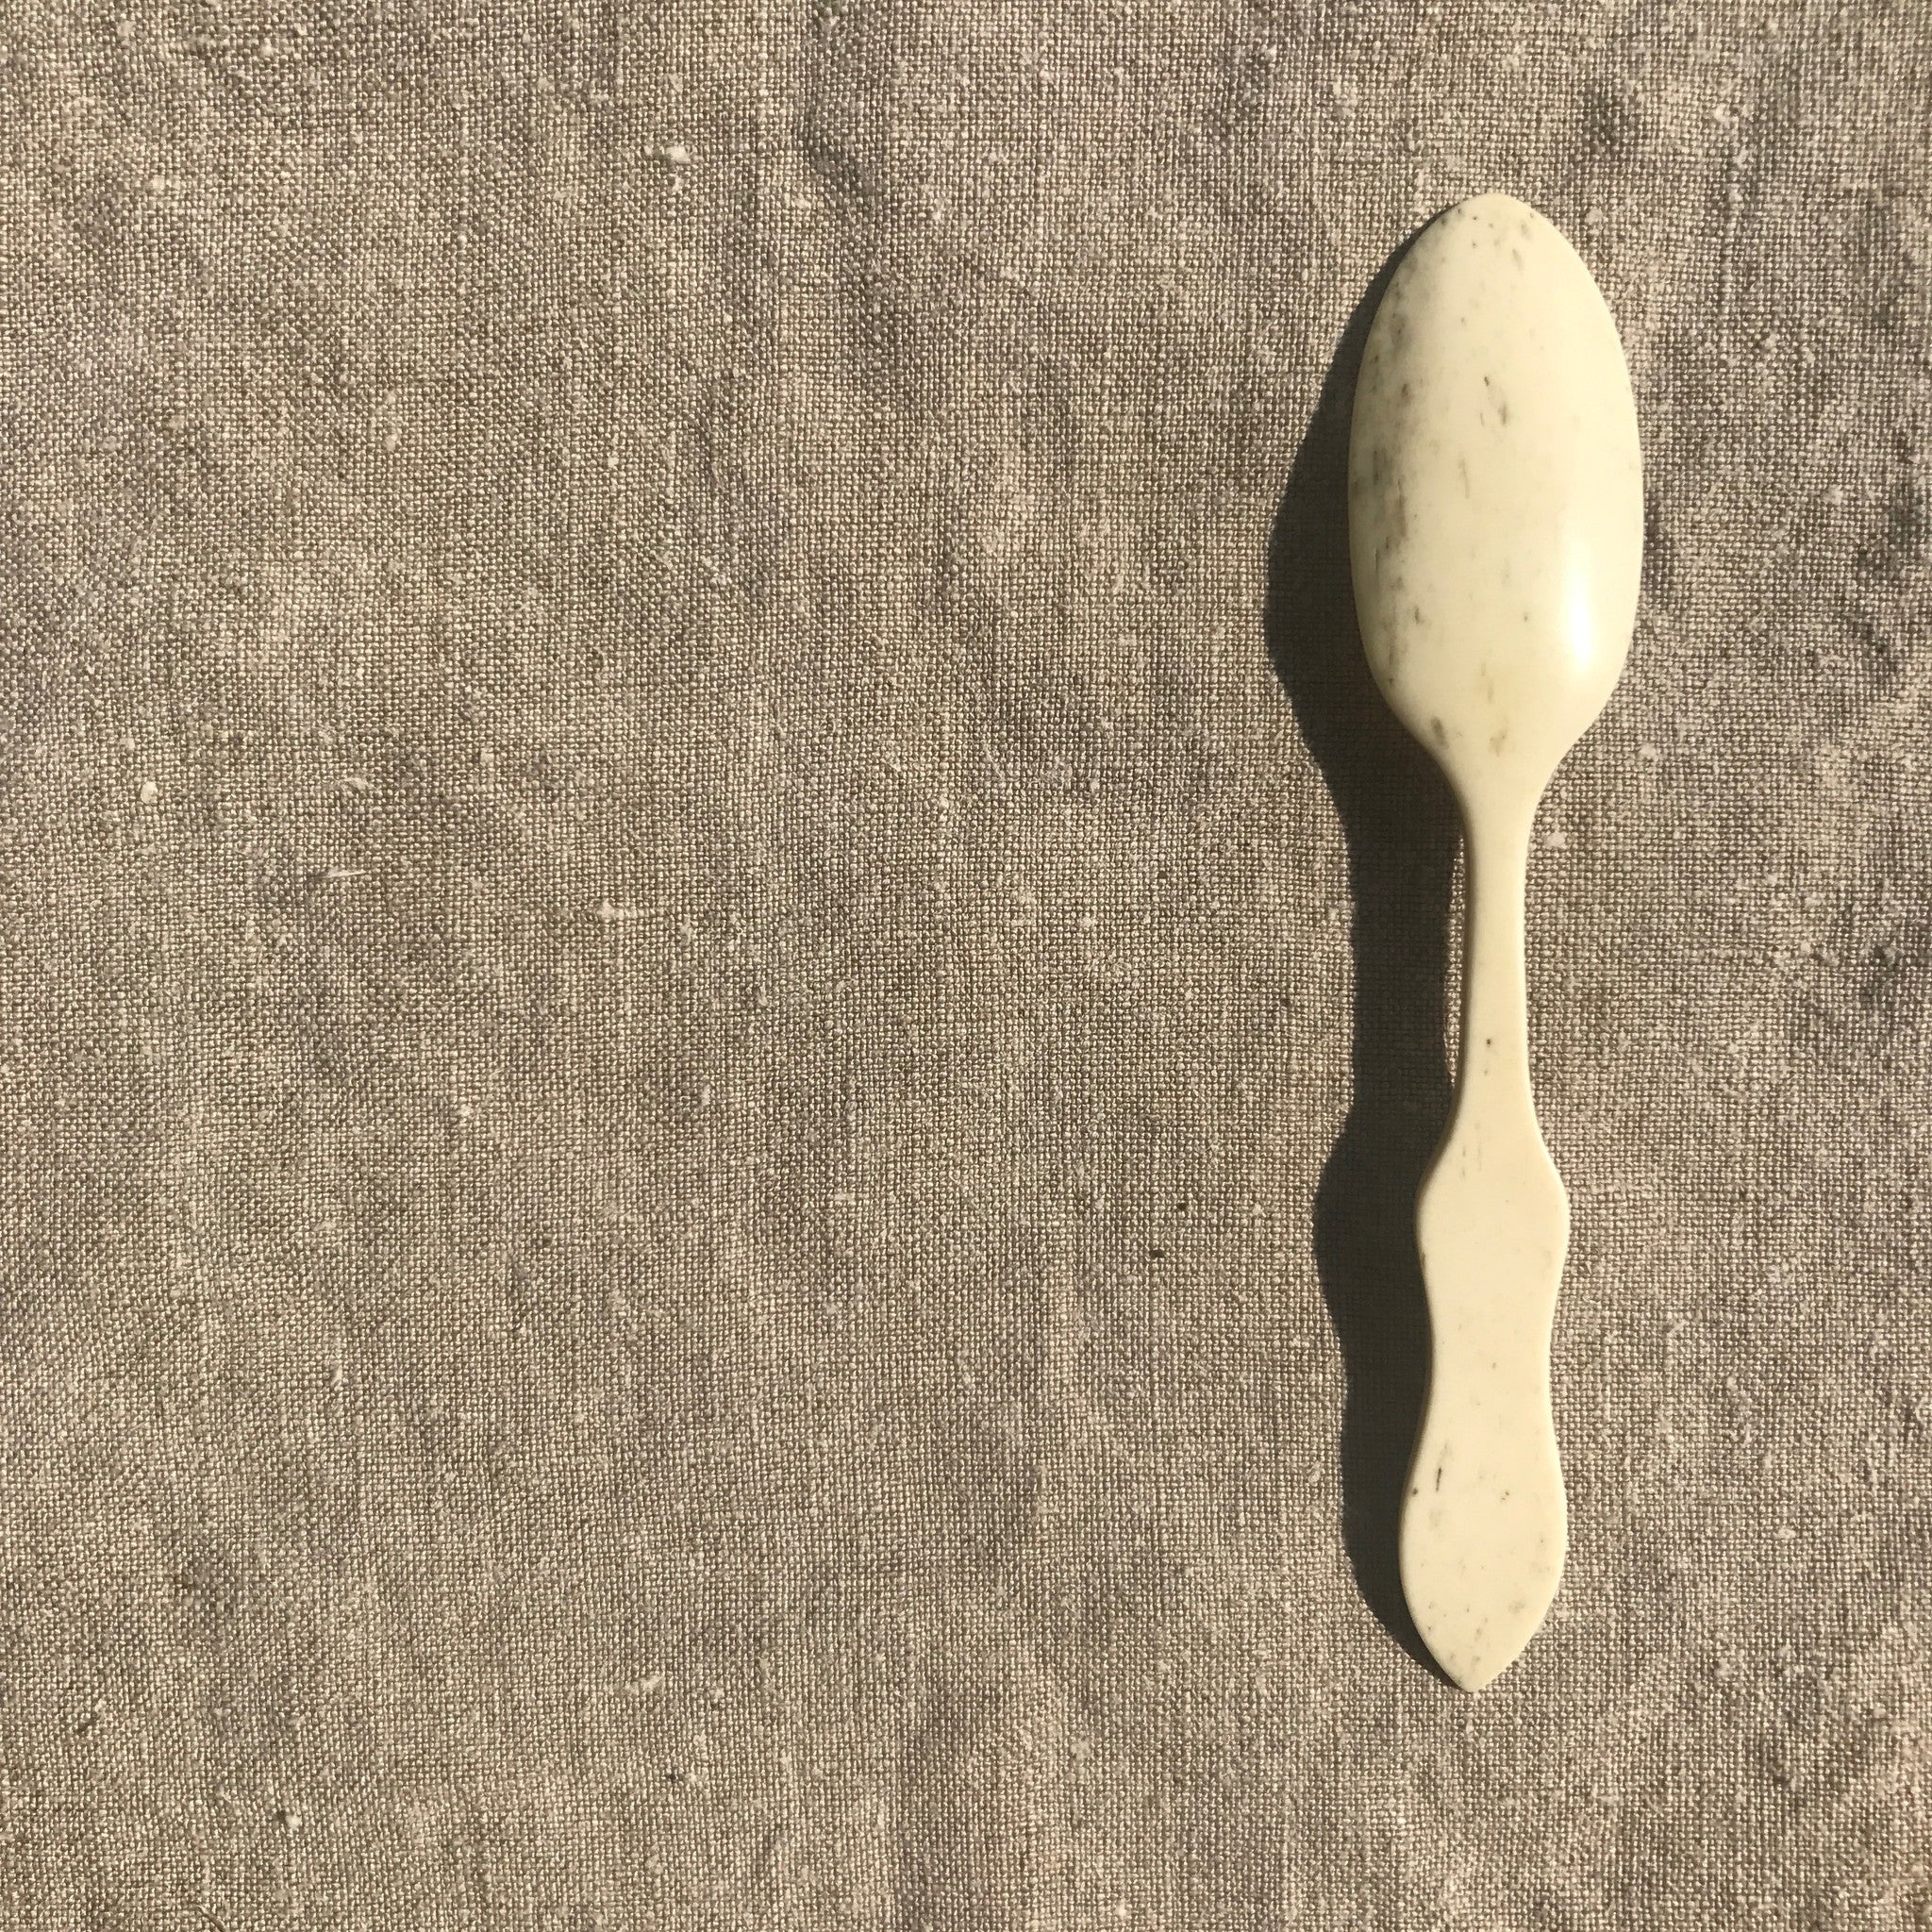 seaman's caviar spoon (6 of 7)